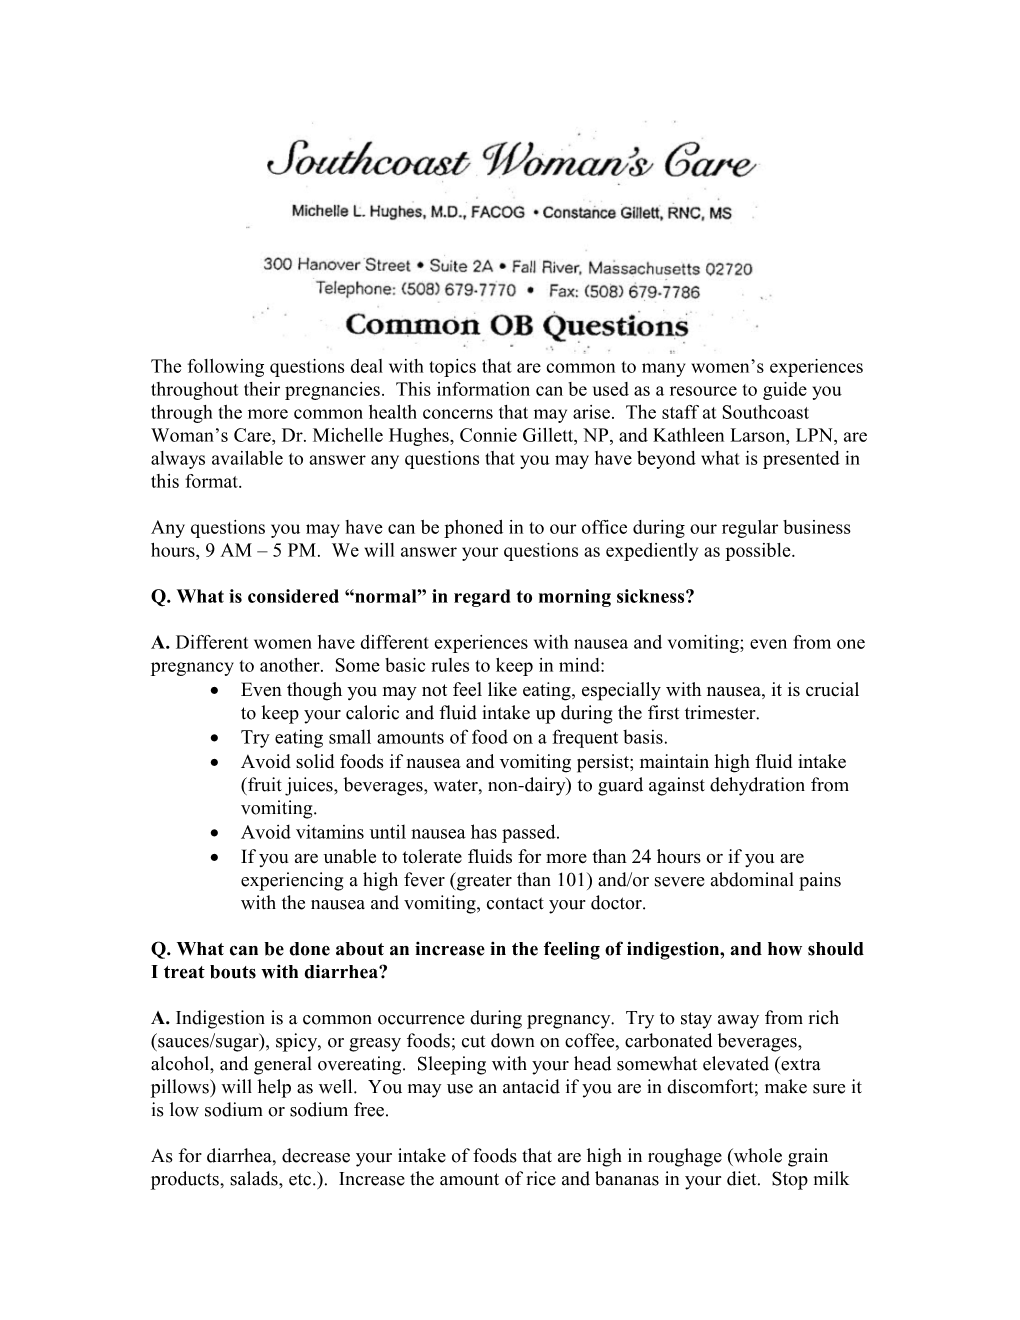 Common OB Questions